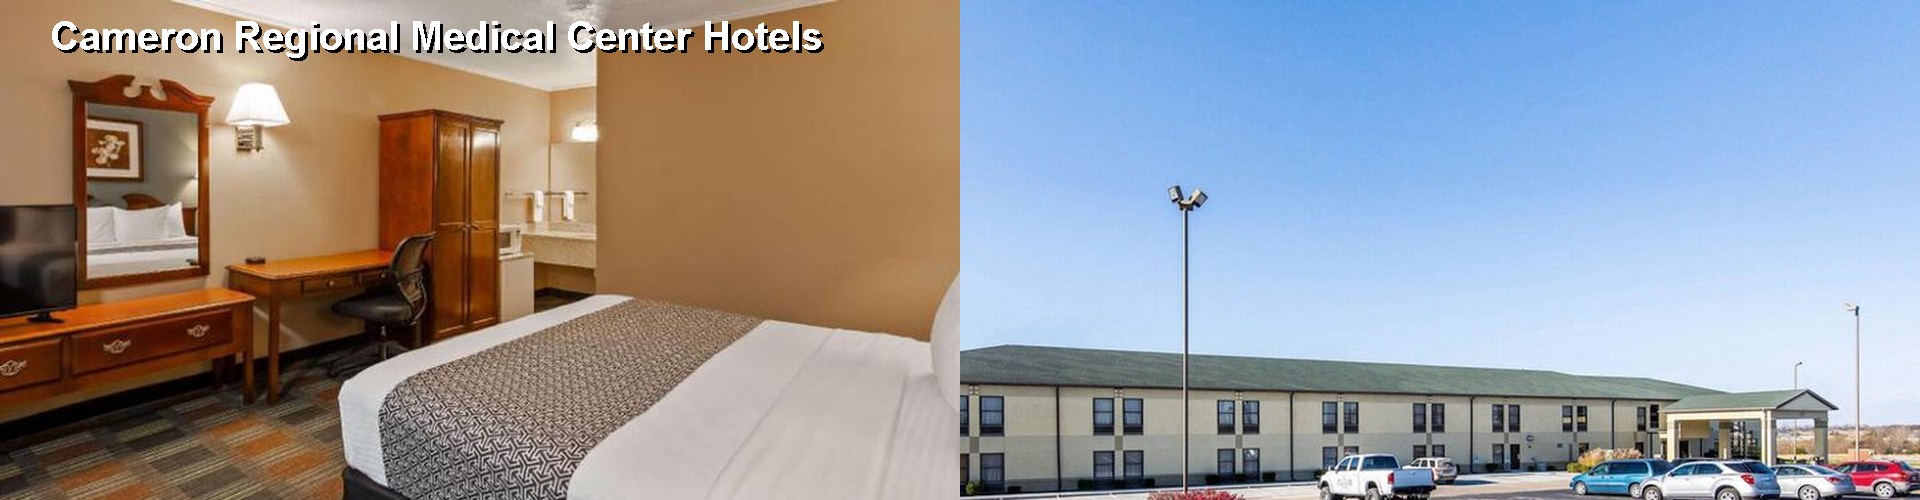 4 Best Hotels near Cameron Regional Medical Center